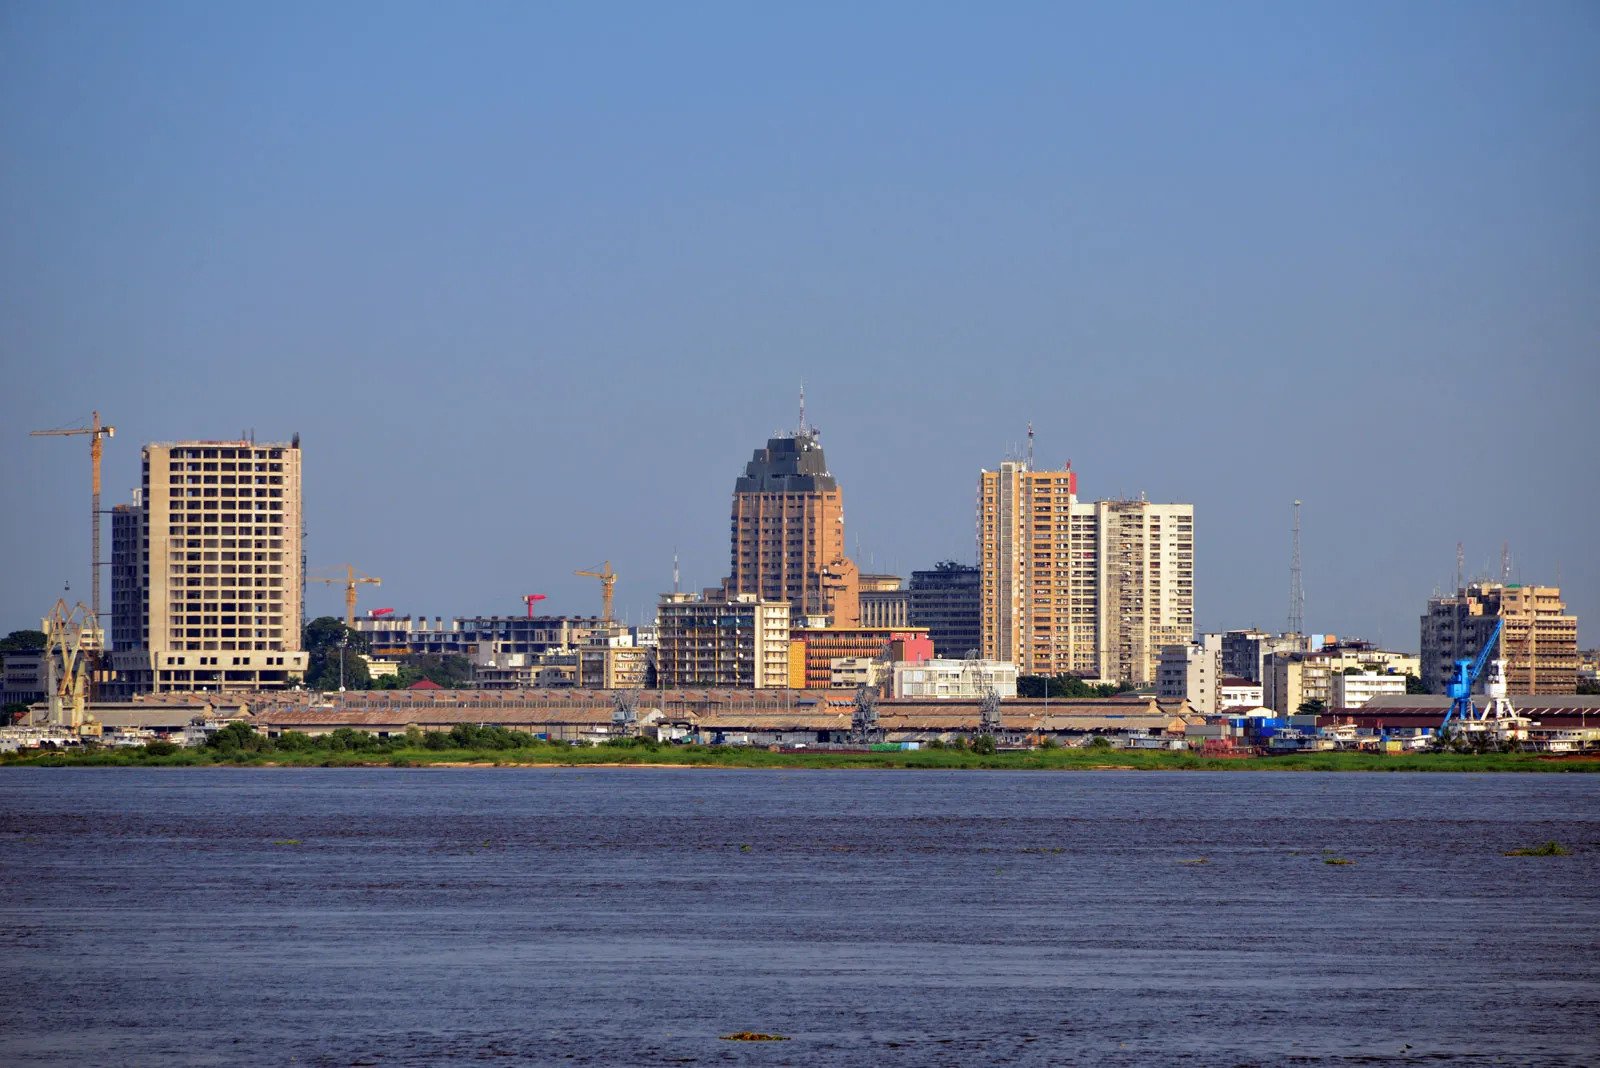 Skyline view of Kinshasa - Democratic Republic of the Congo